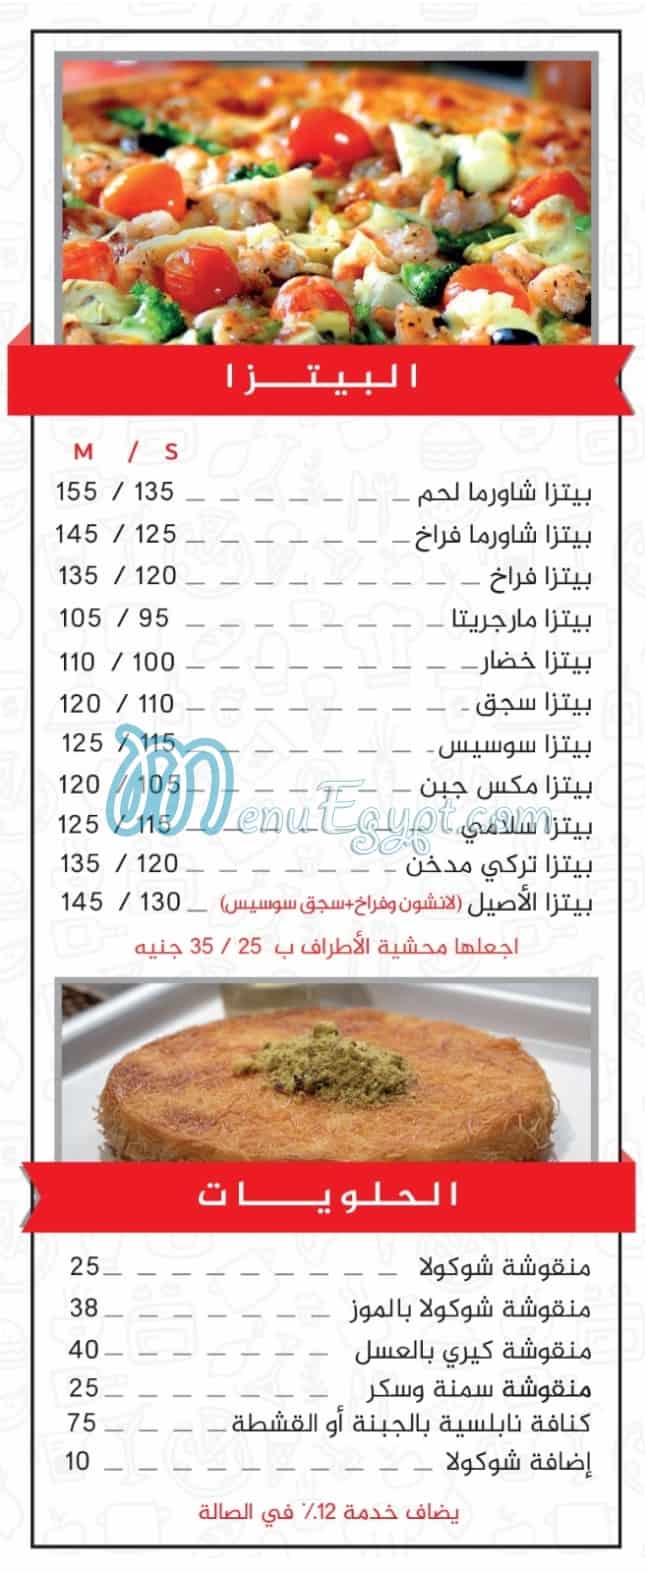 Al Aseel menu Egypt 2